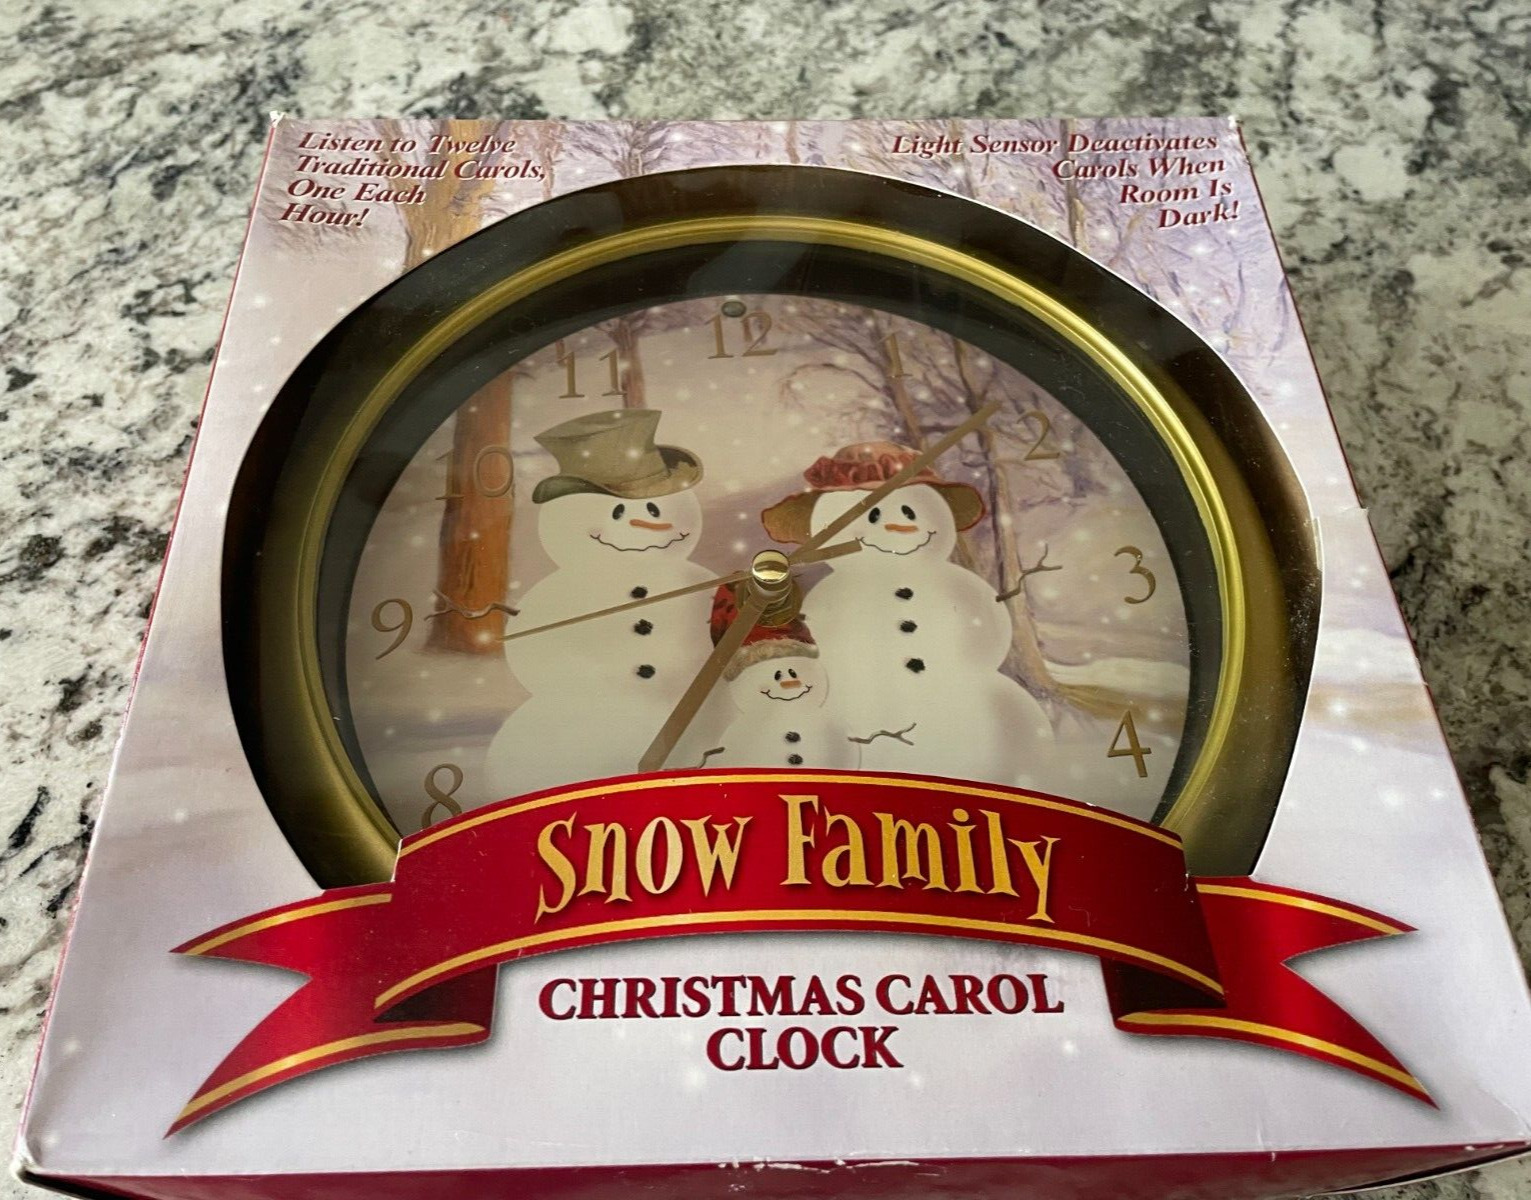 Snow Family Christmas Carol Clock Christmas Carols and Light Sensor